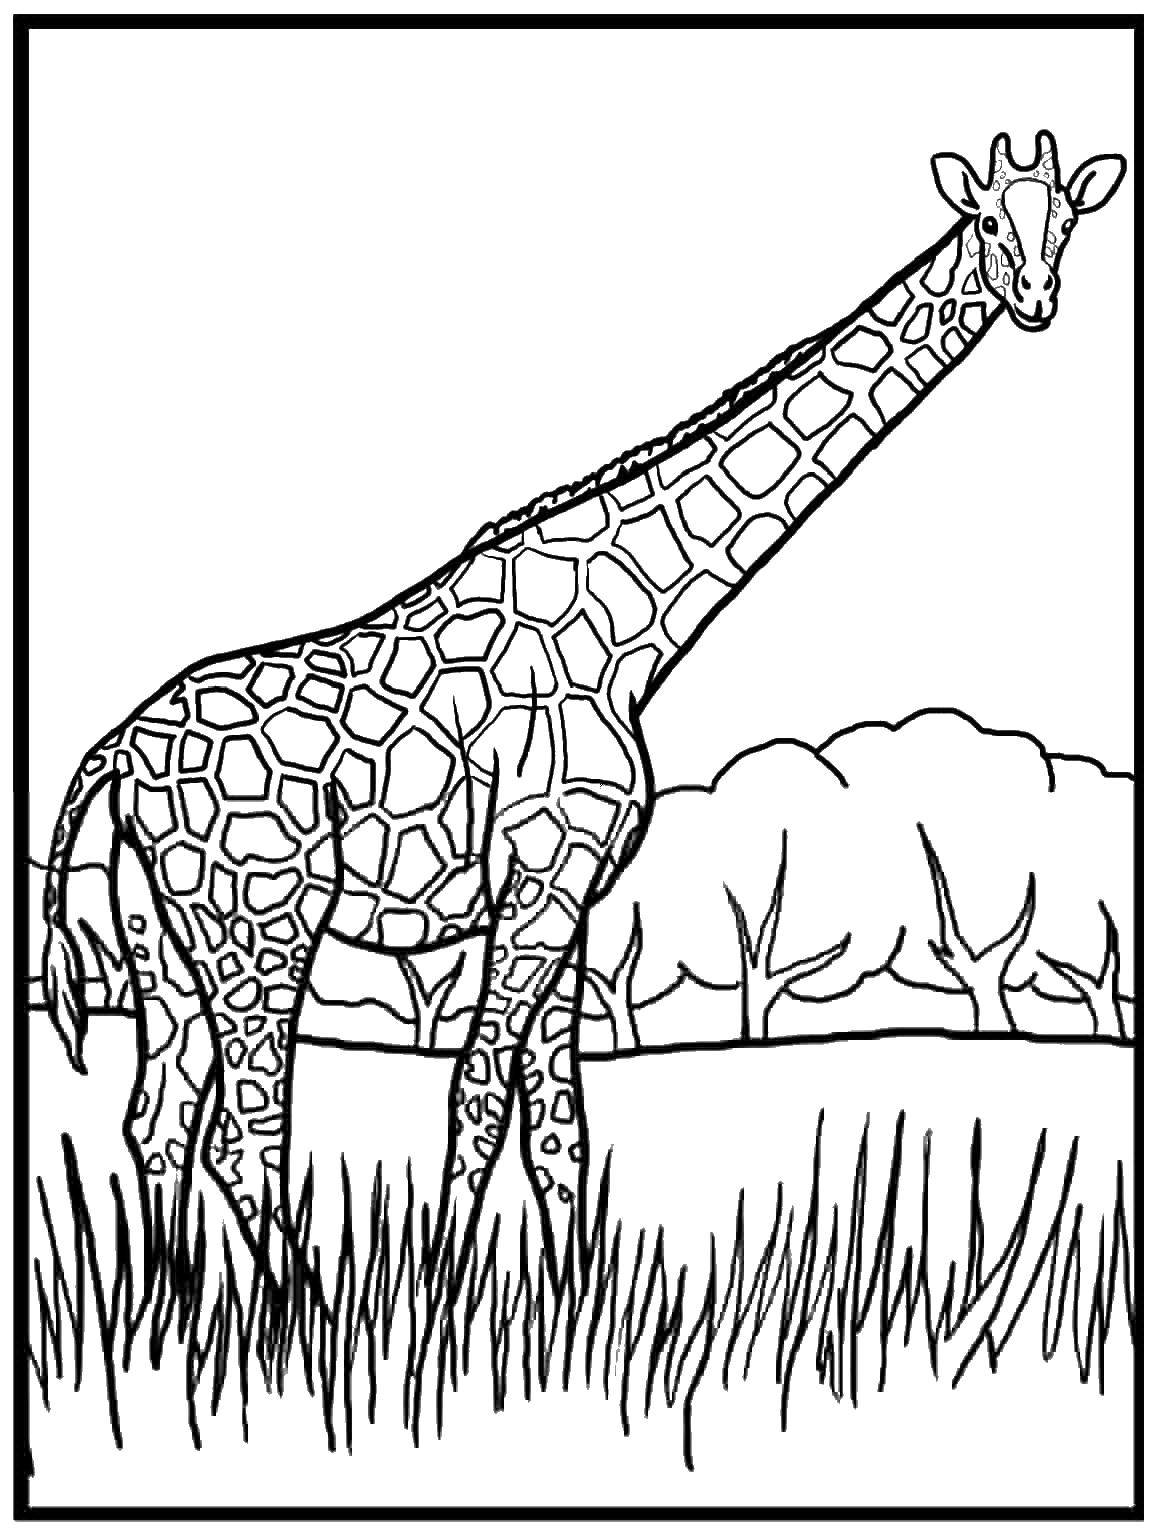 Coloring Giraffe in Safari. Category Animals. Tags:  animals, giraffe.